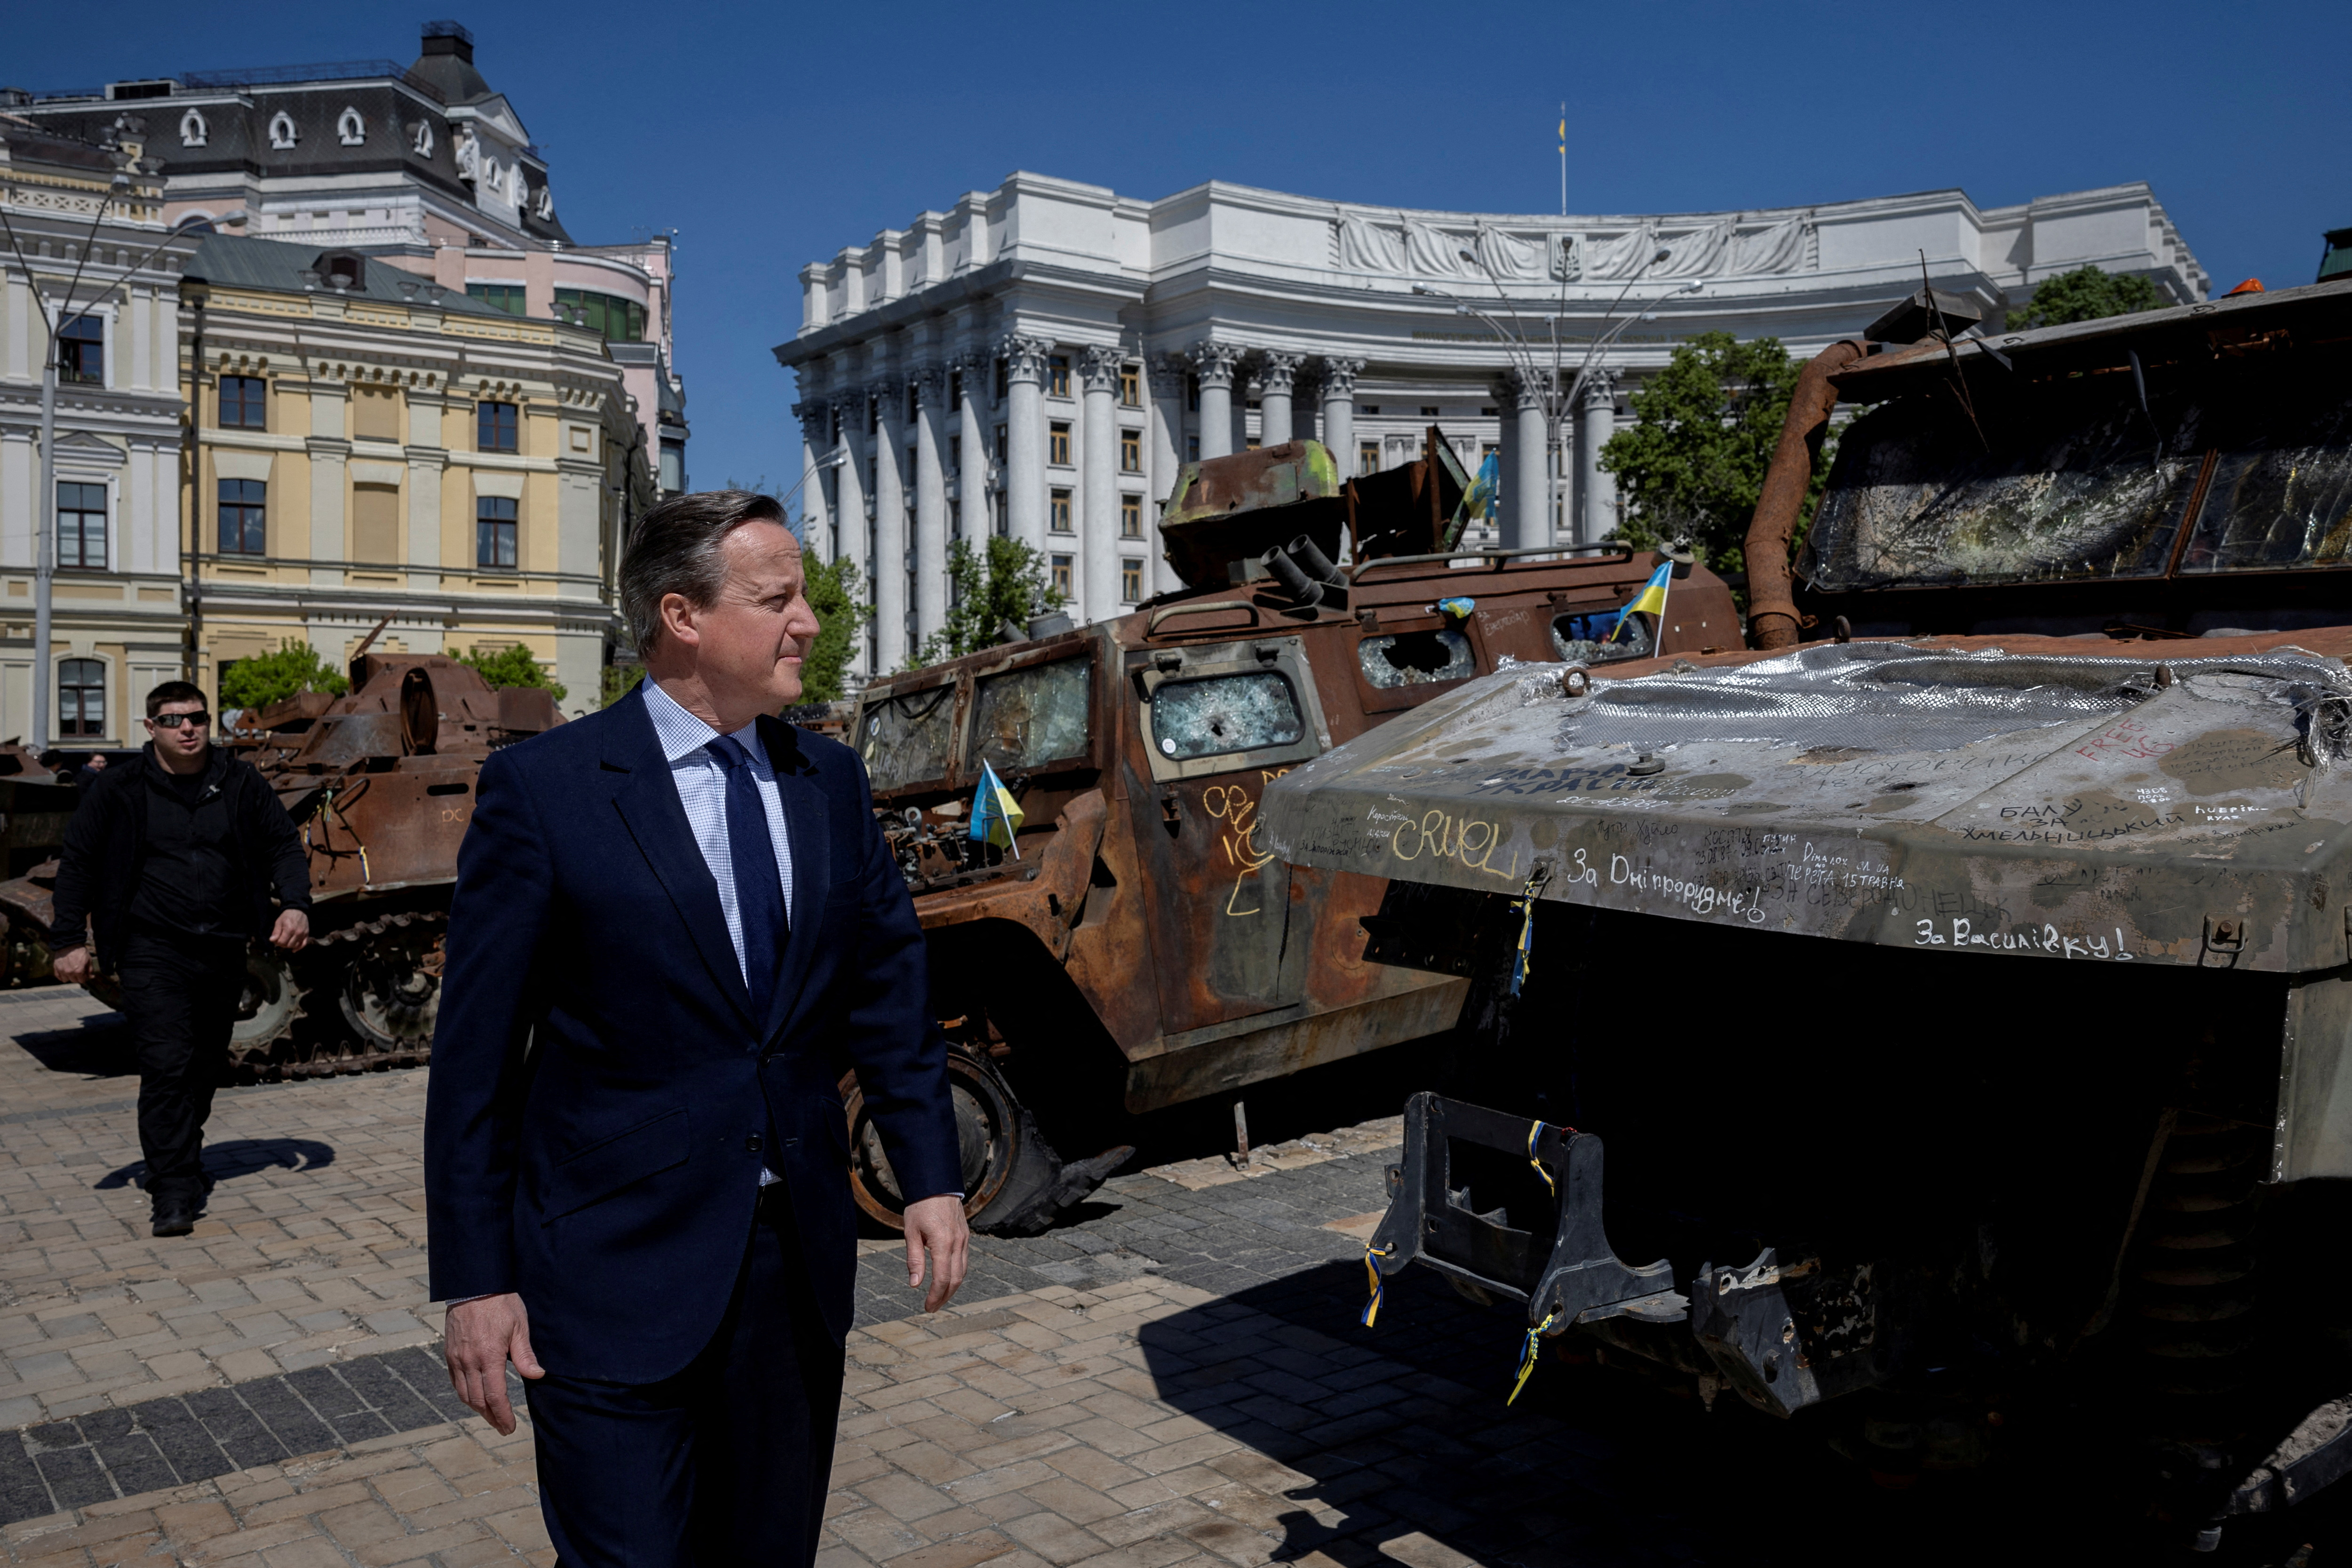 Britain's Foreign Secretary David Cameron and Ukrainian Foreign Minister Dmytro Kuleba meet in Kyiv